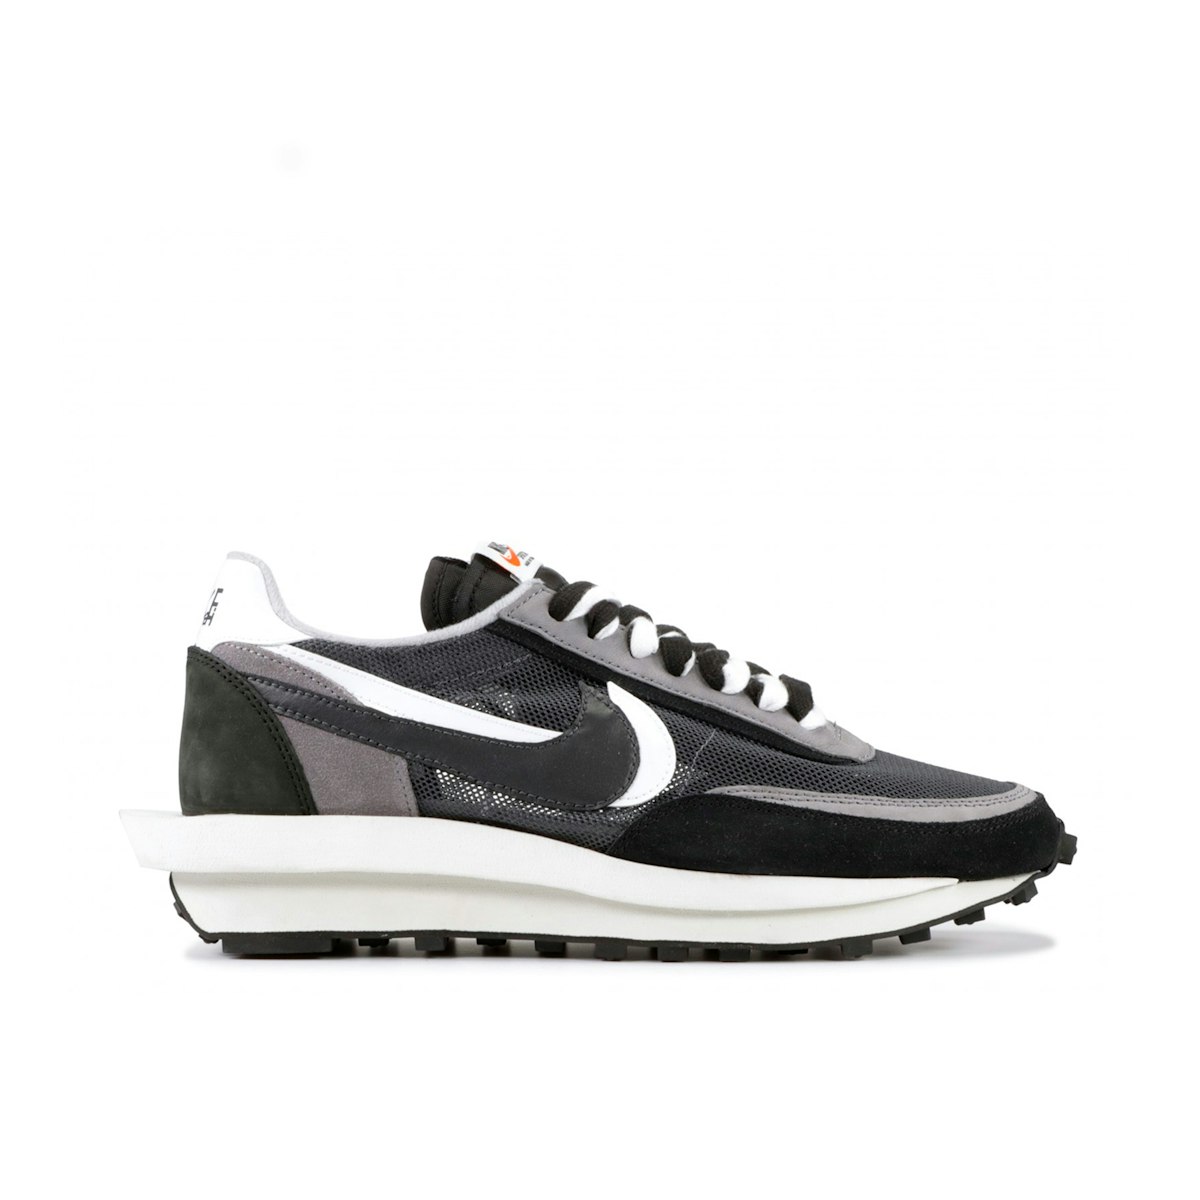 Dubbelzinnig Lee Wolf in schaapskleren Nike LDWaffle x Sacai Black | BV0073-001 | Laced